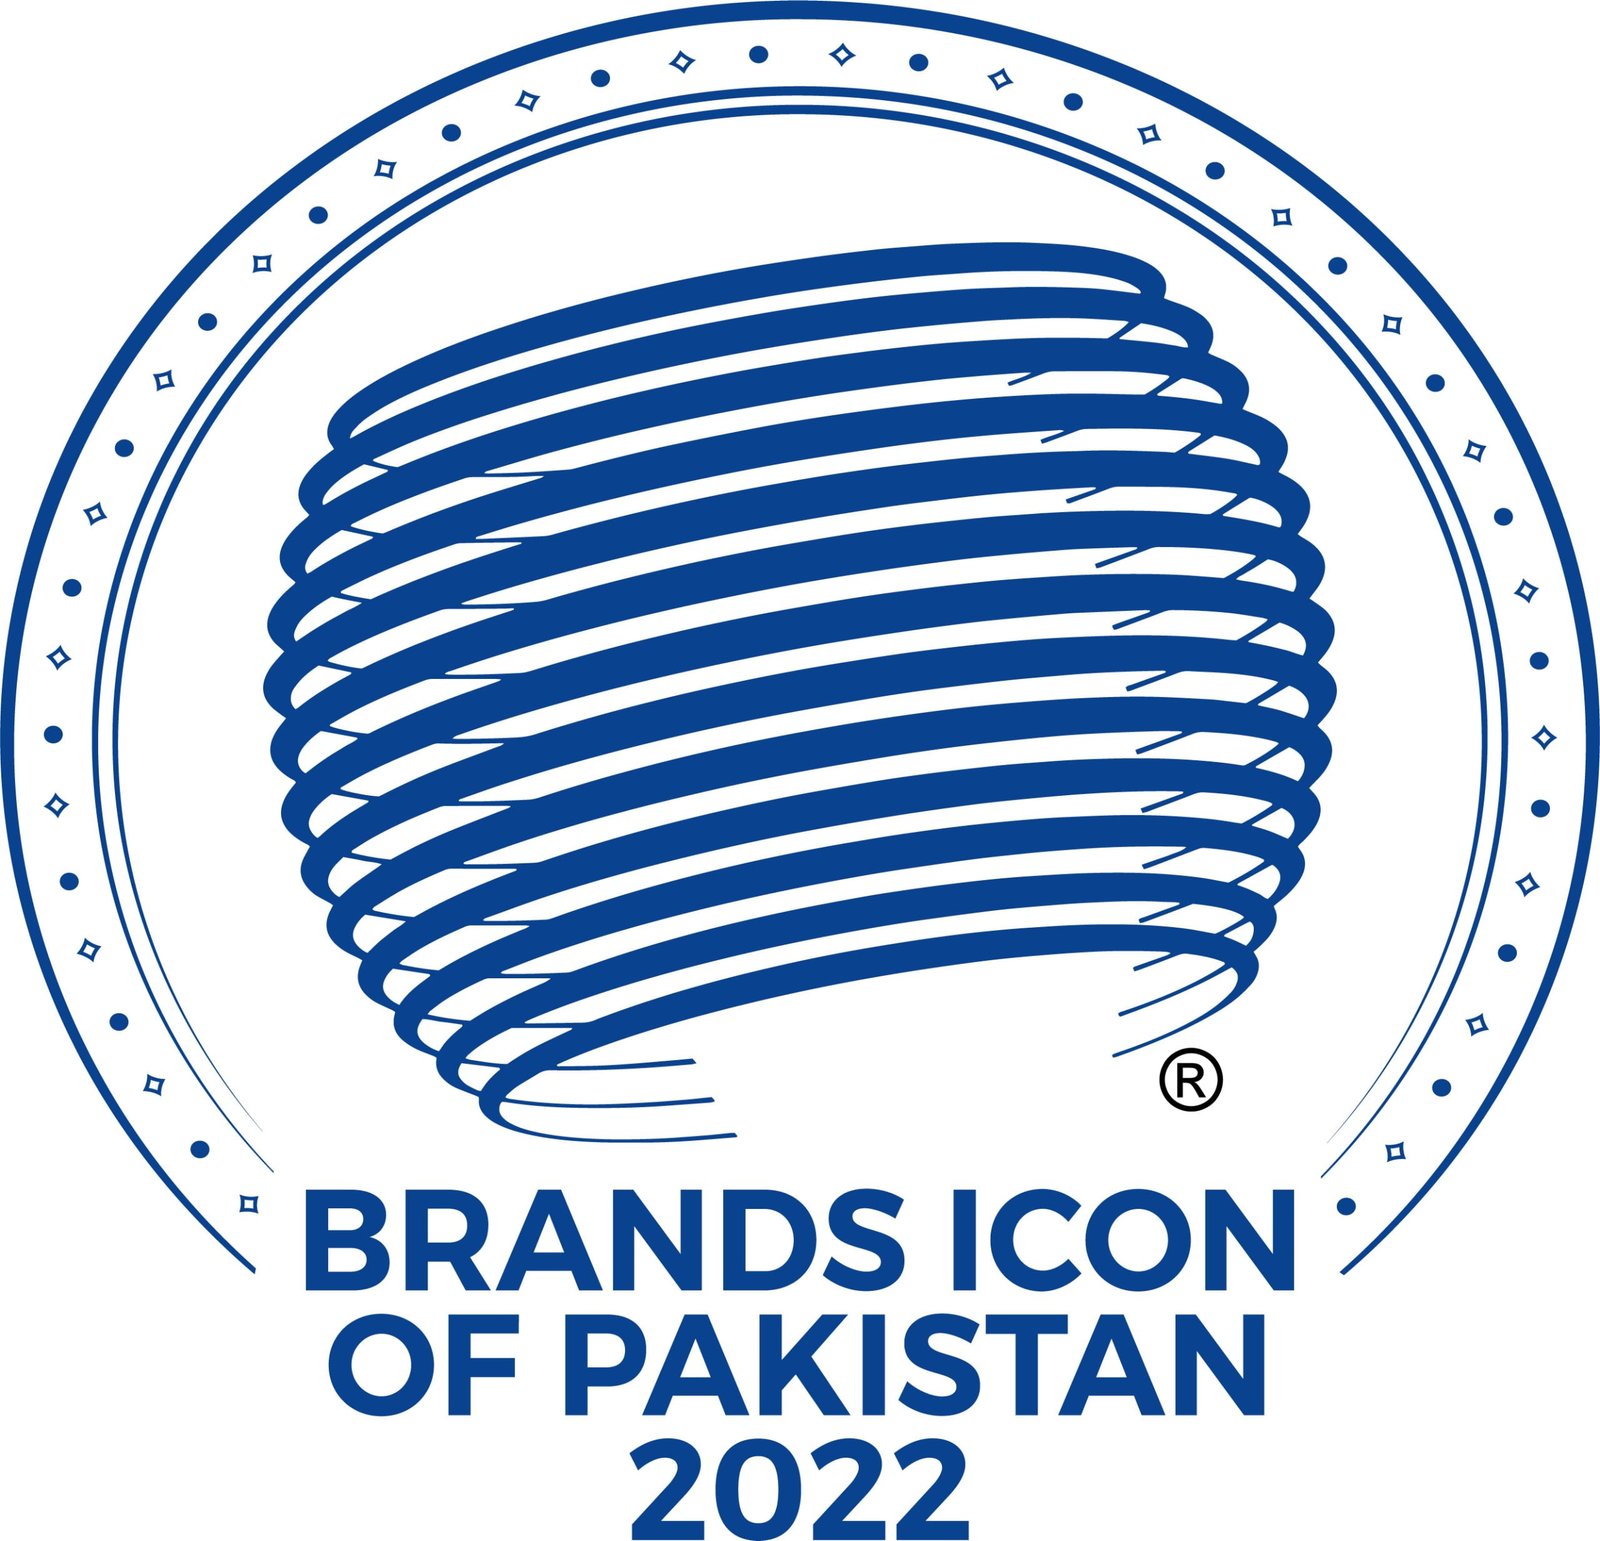 Brands Icon of Pakistan 2022 logo